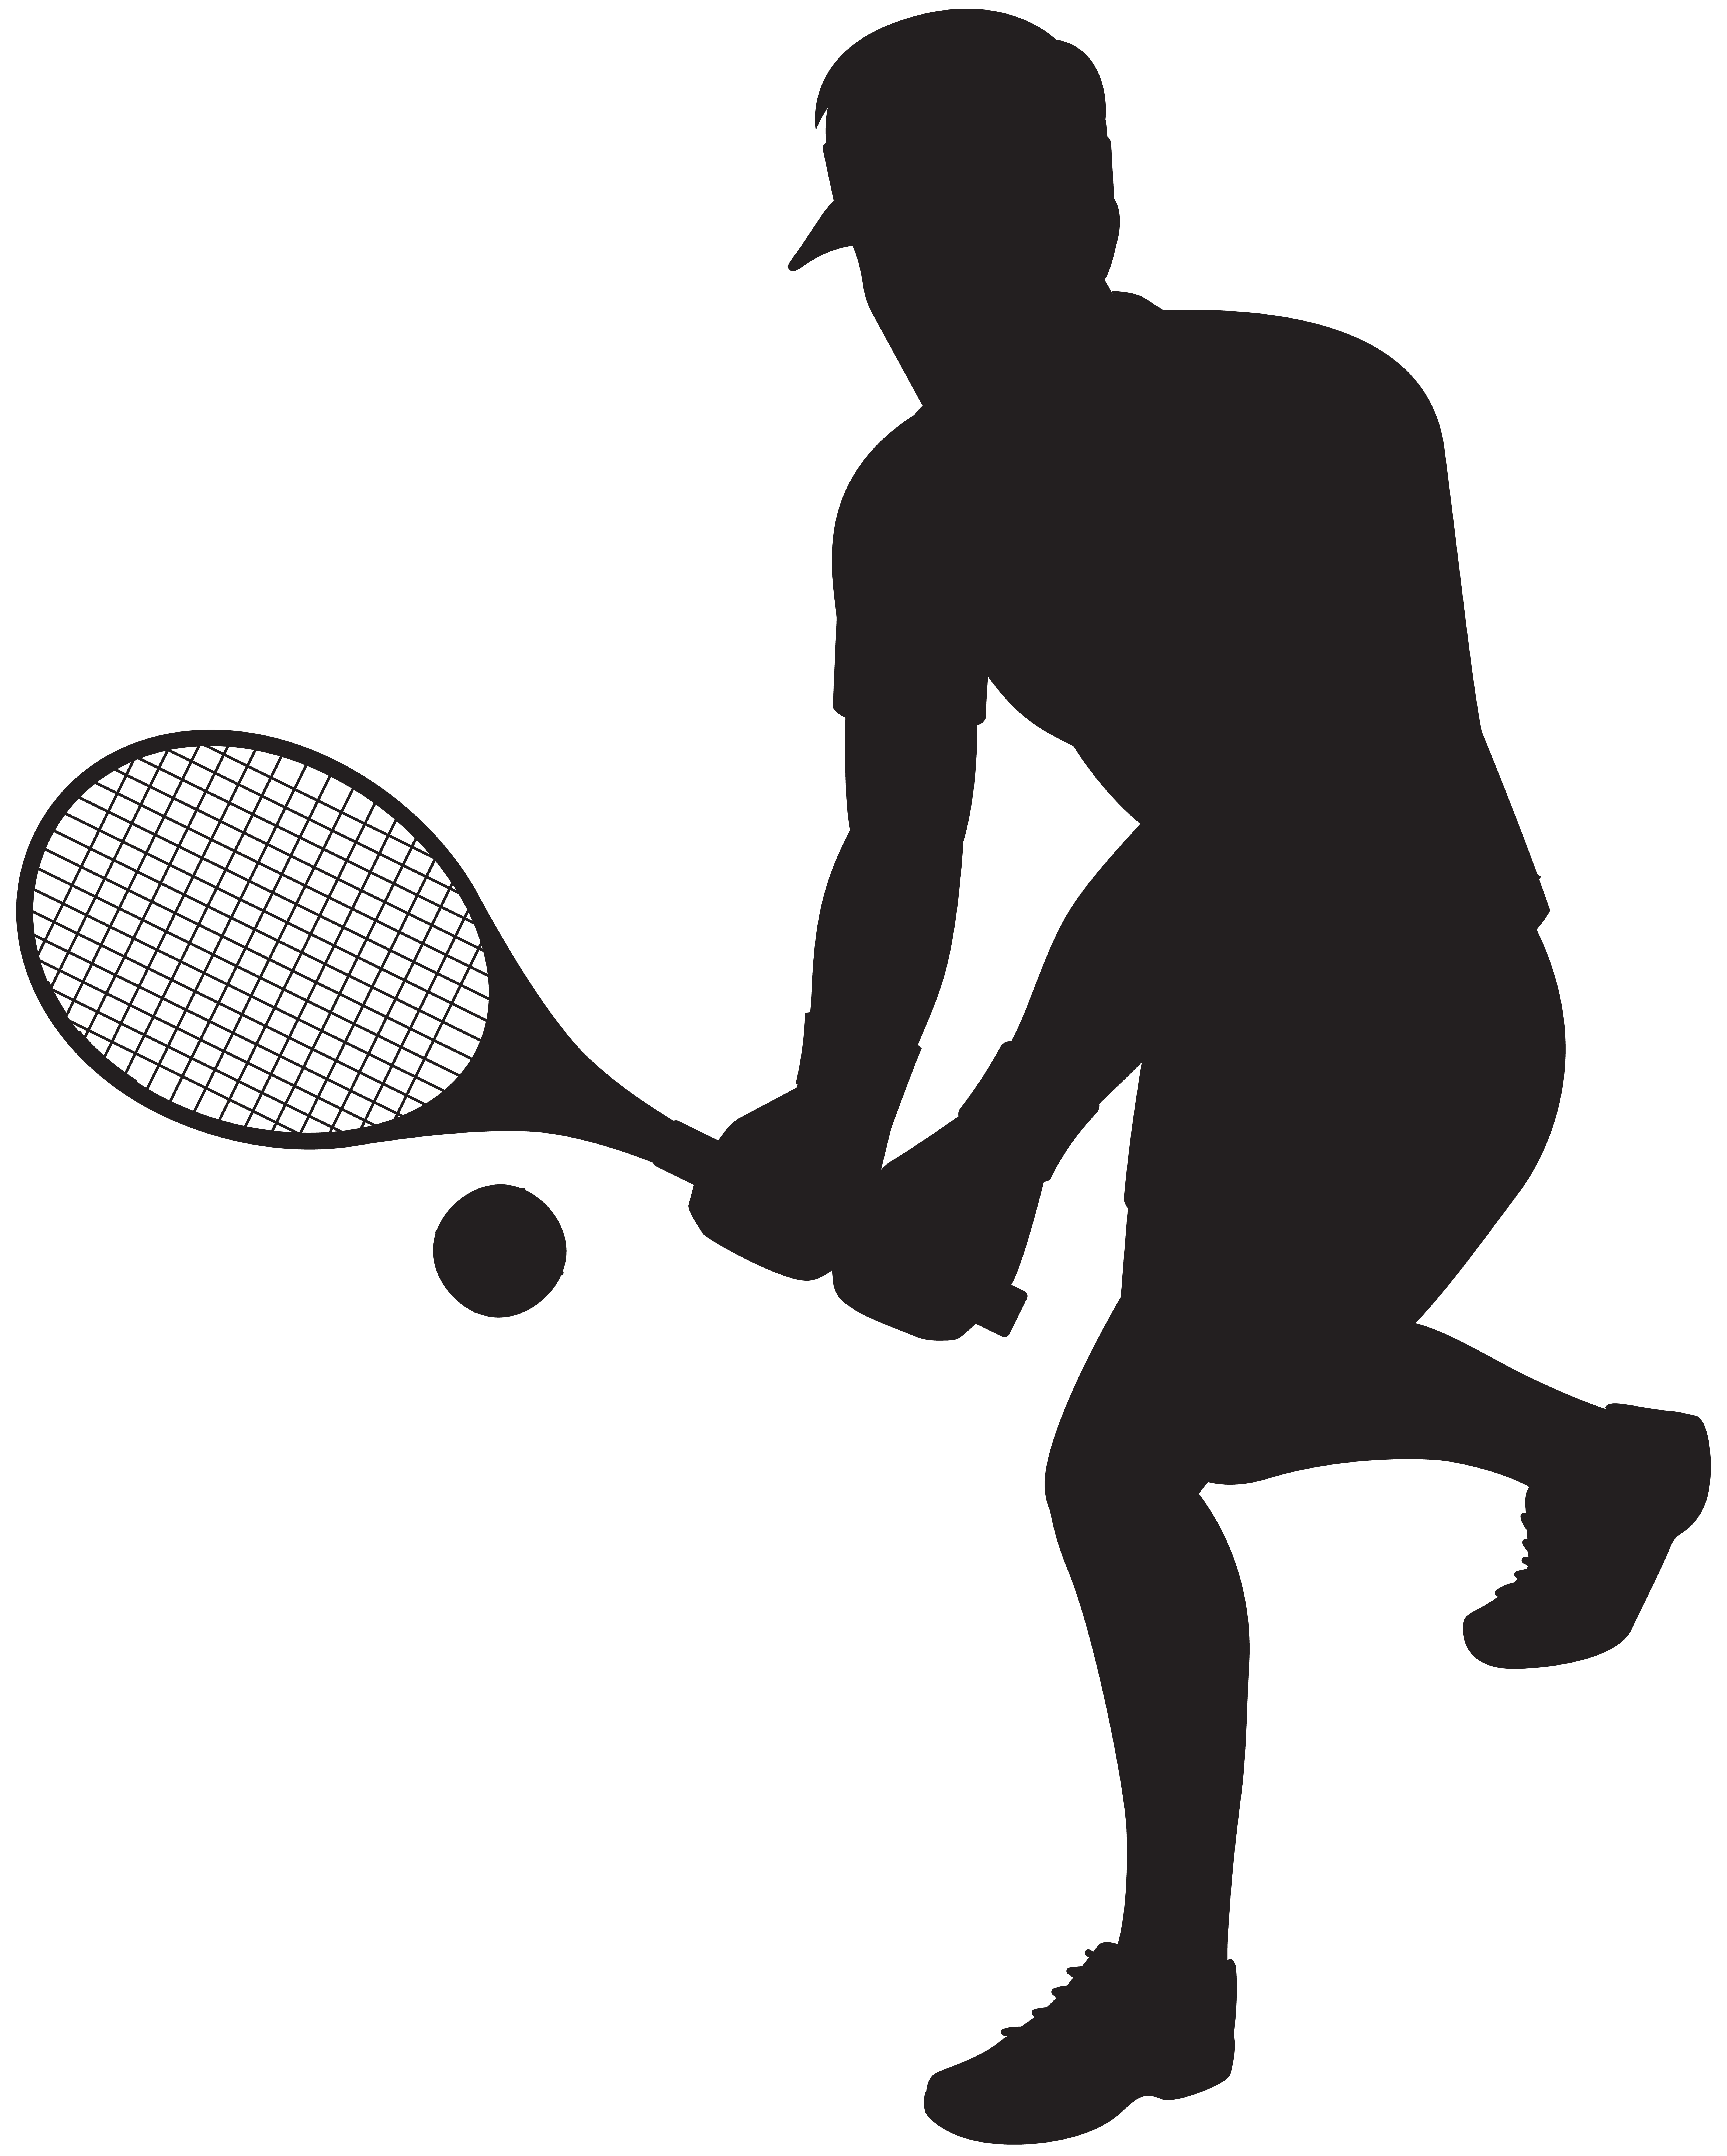 Tennis Player Silhouette Clip Art Image.